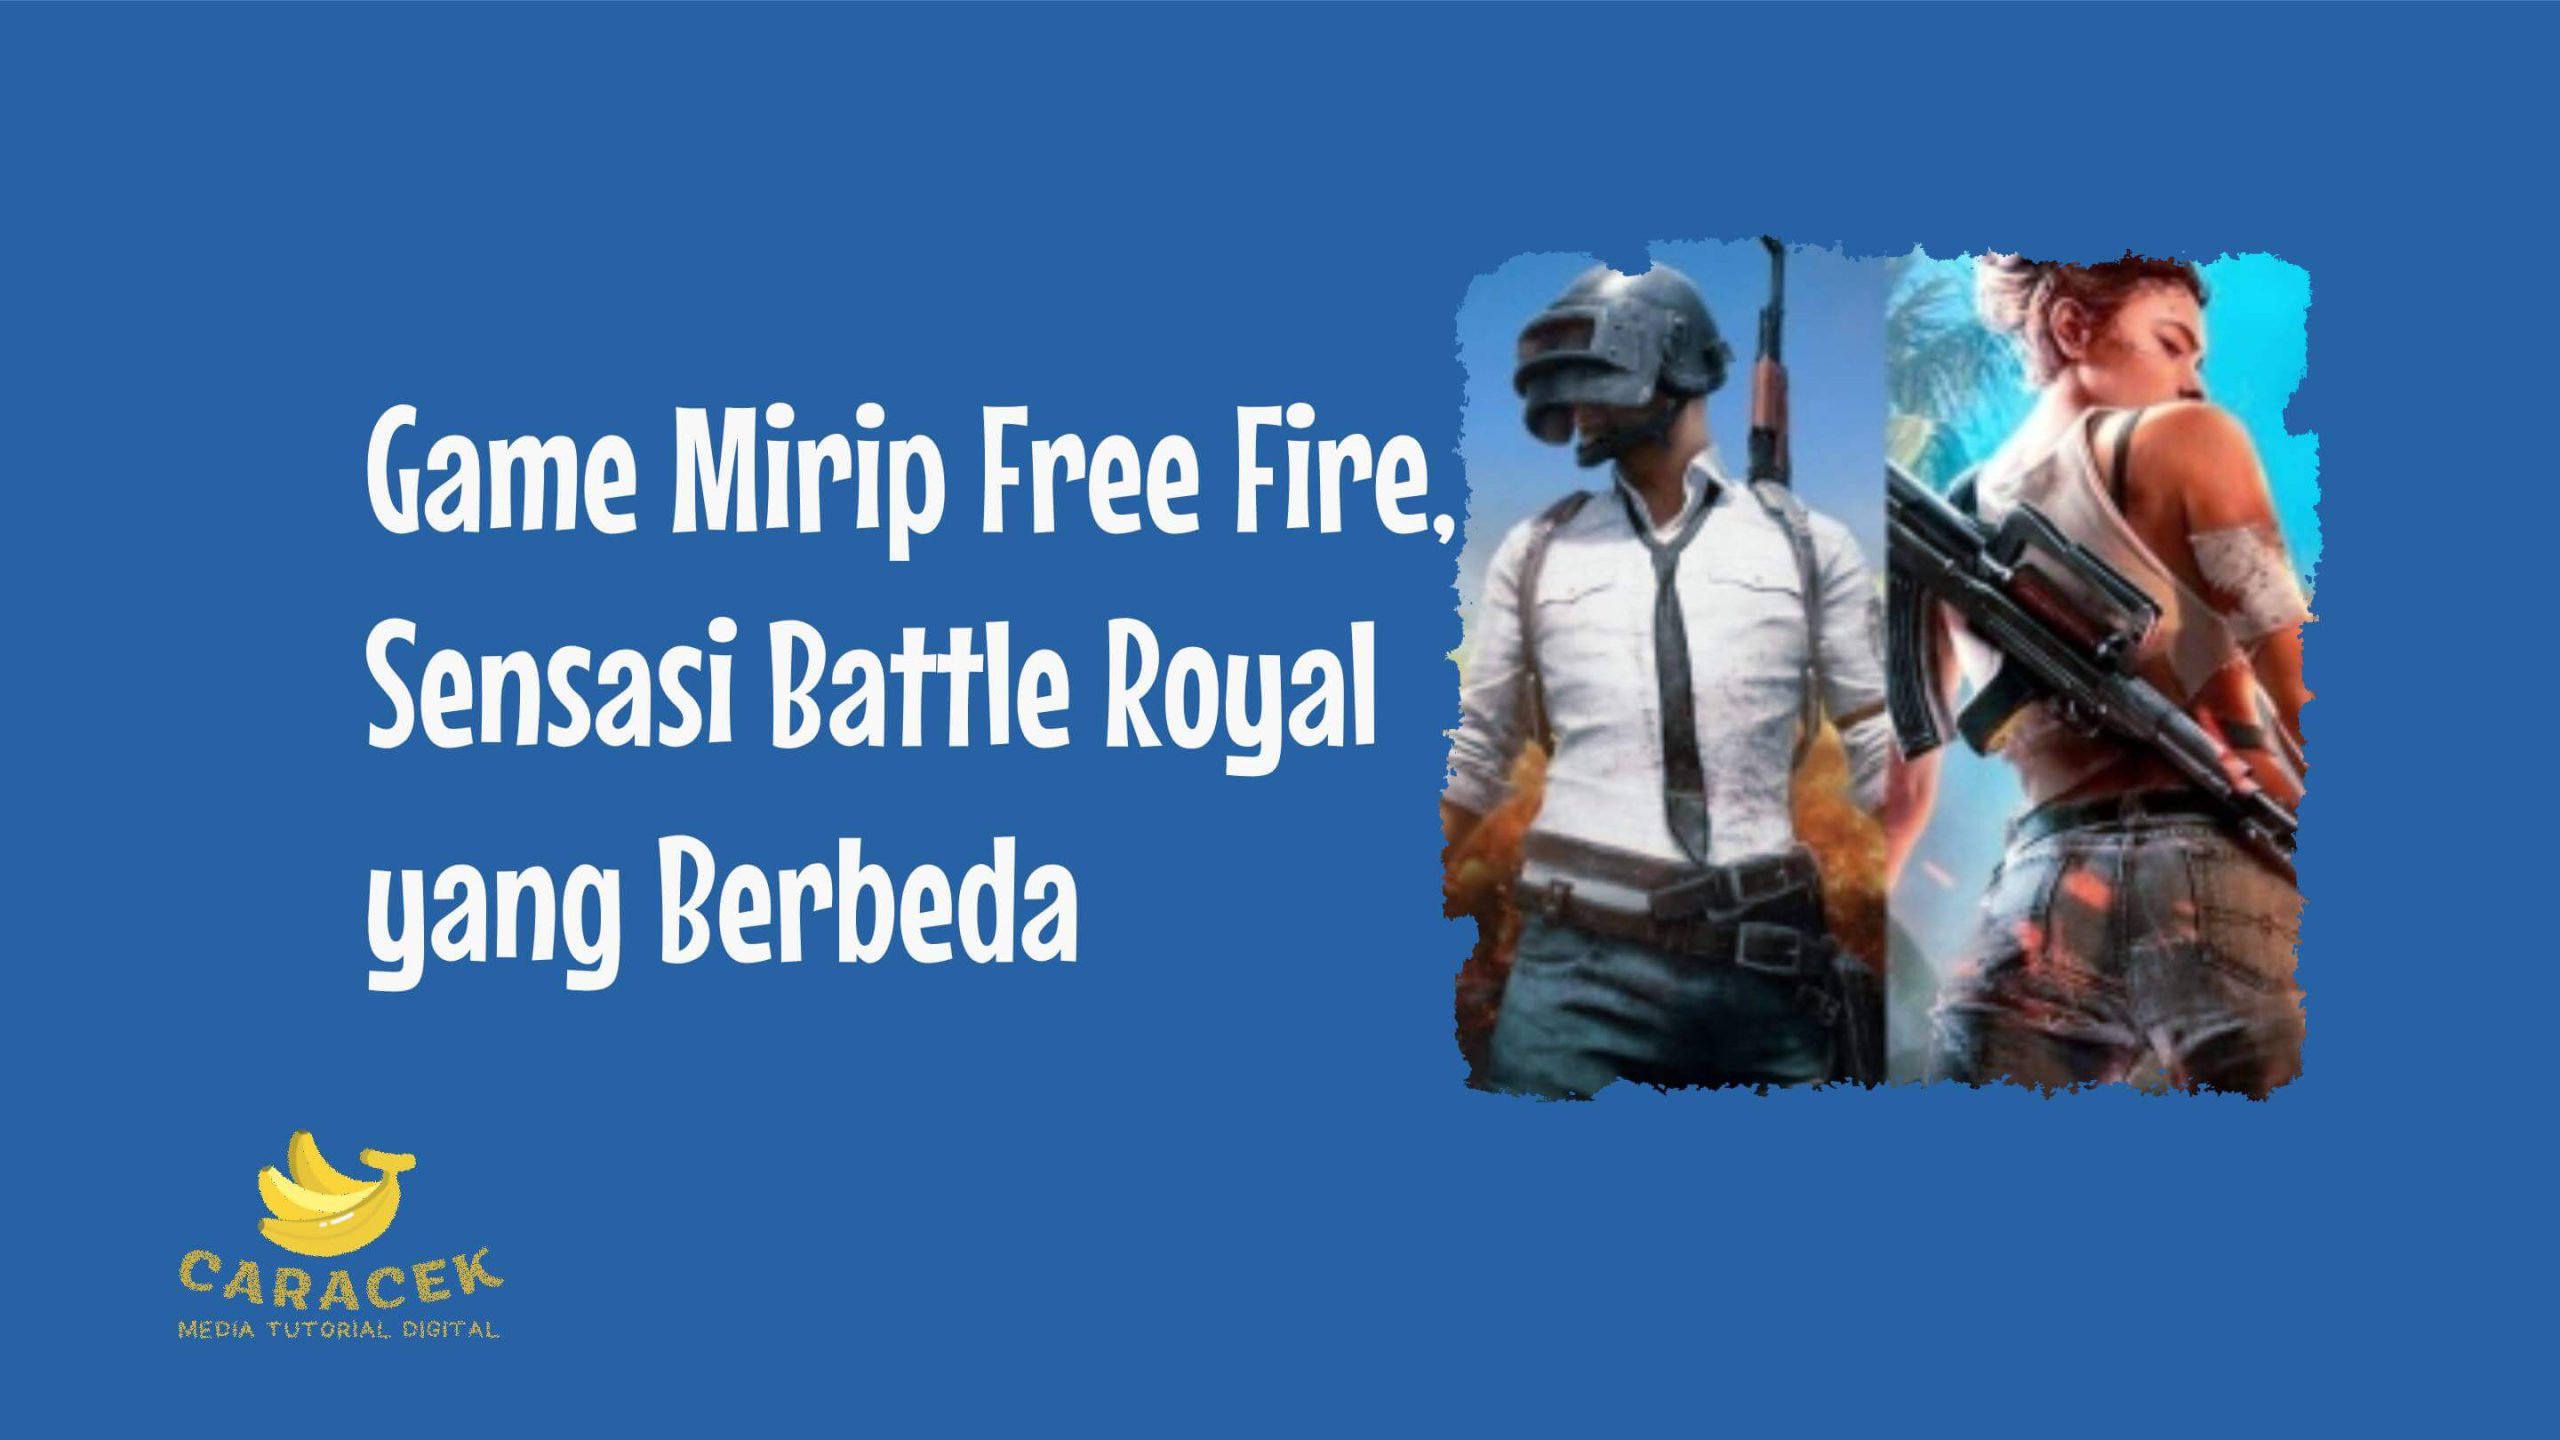 Game Mirip Free Fire